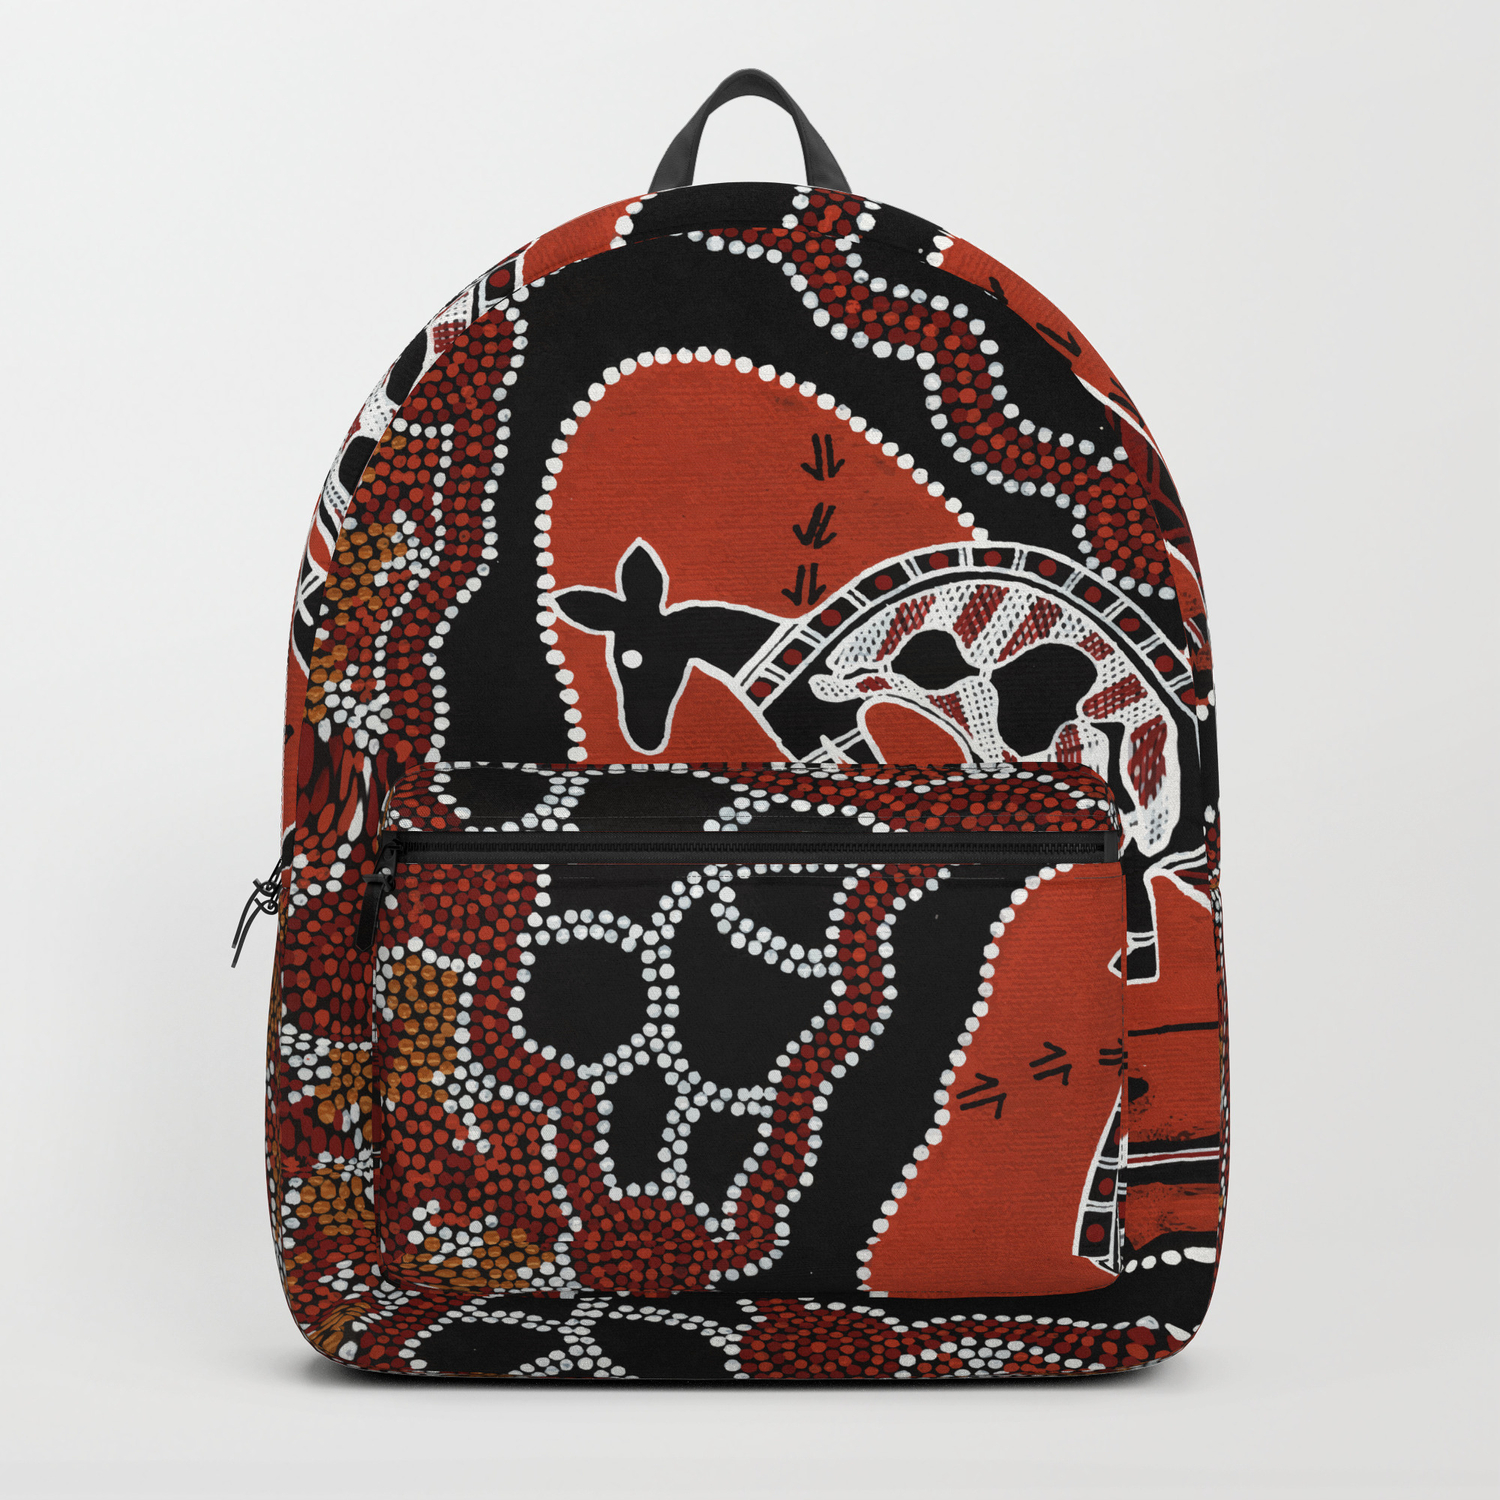 Consequent Koe Beperken Authentic Aboriginal Art - Men Hunting Kangaroos Backpack by Hogarth Arts -  Authentic Aboriginal Art | Society6